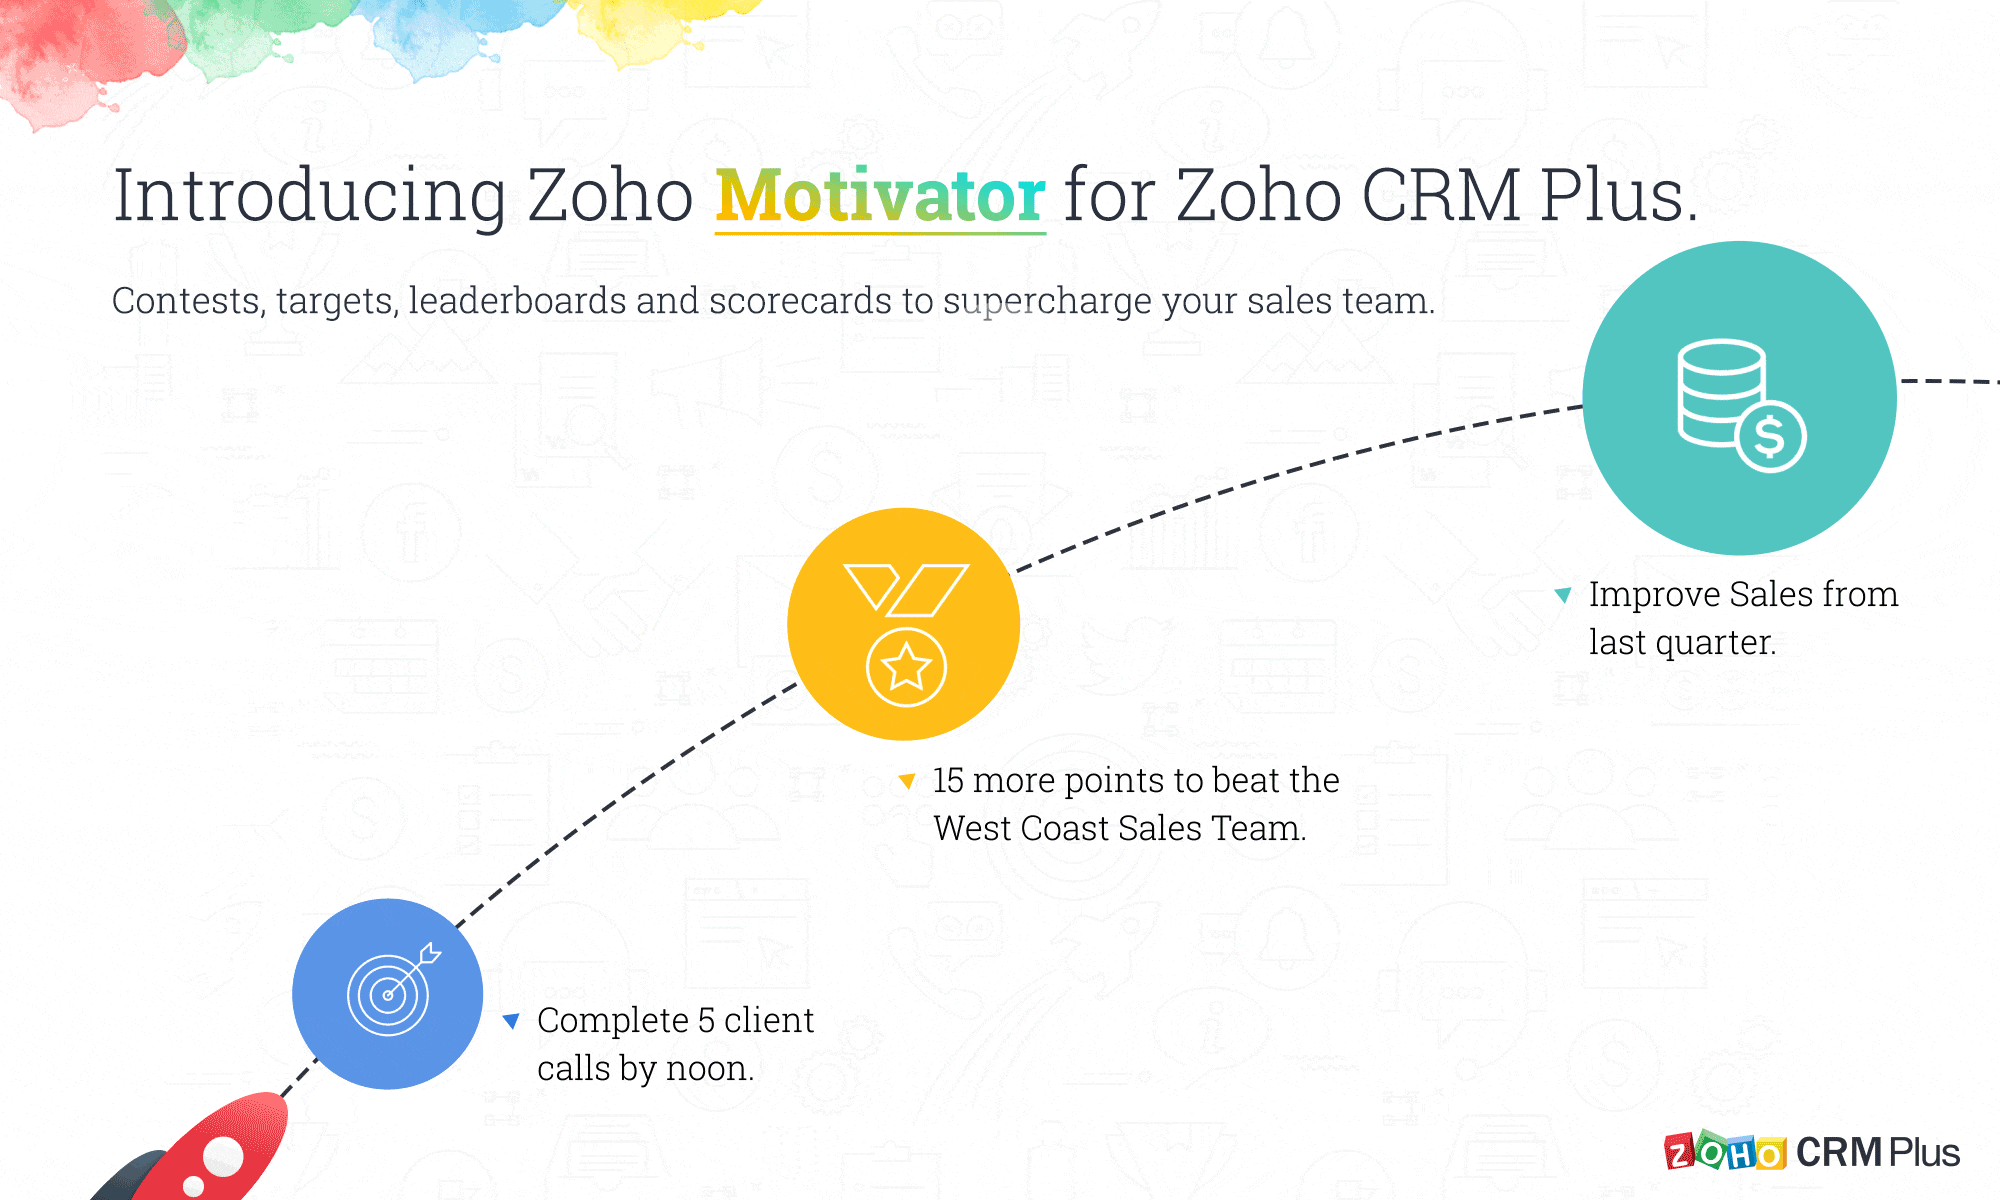 Le damos la bienvenida al nuevo miembro de ZOHO CRM Plus, ZOHO Motivator.